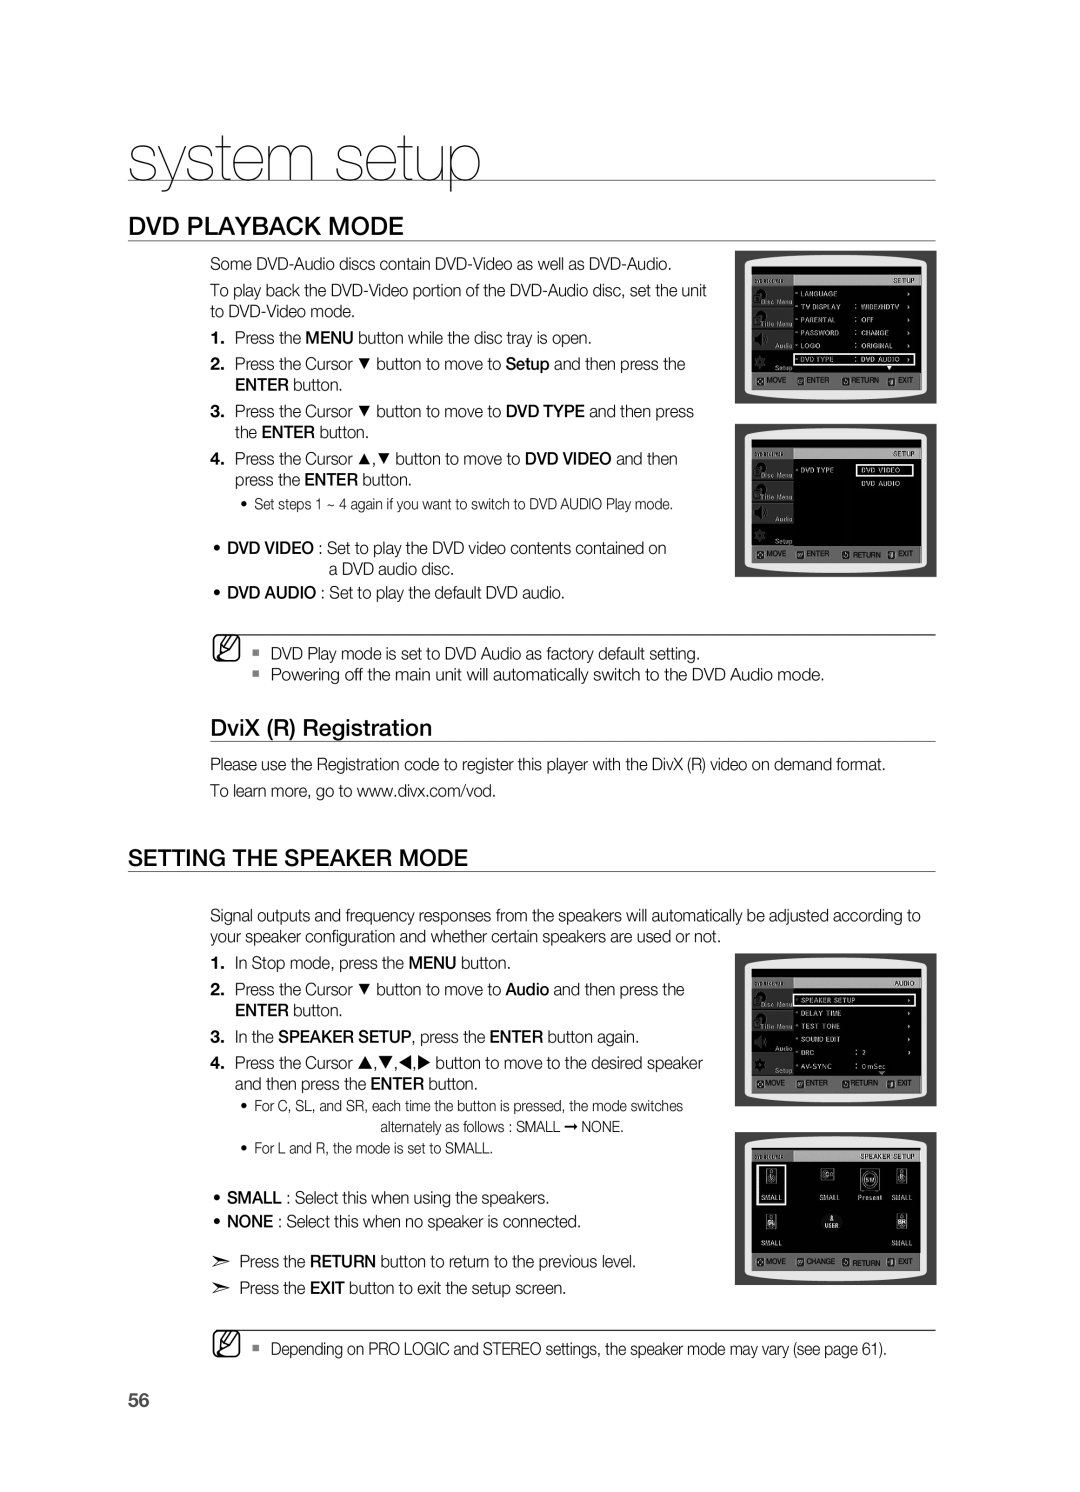 Samsung HT-Z510 manual DVD Playback Mode, system setup, DviX R Registration, Setting the Speaker Mode 